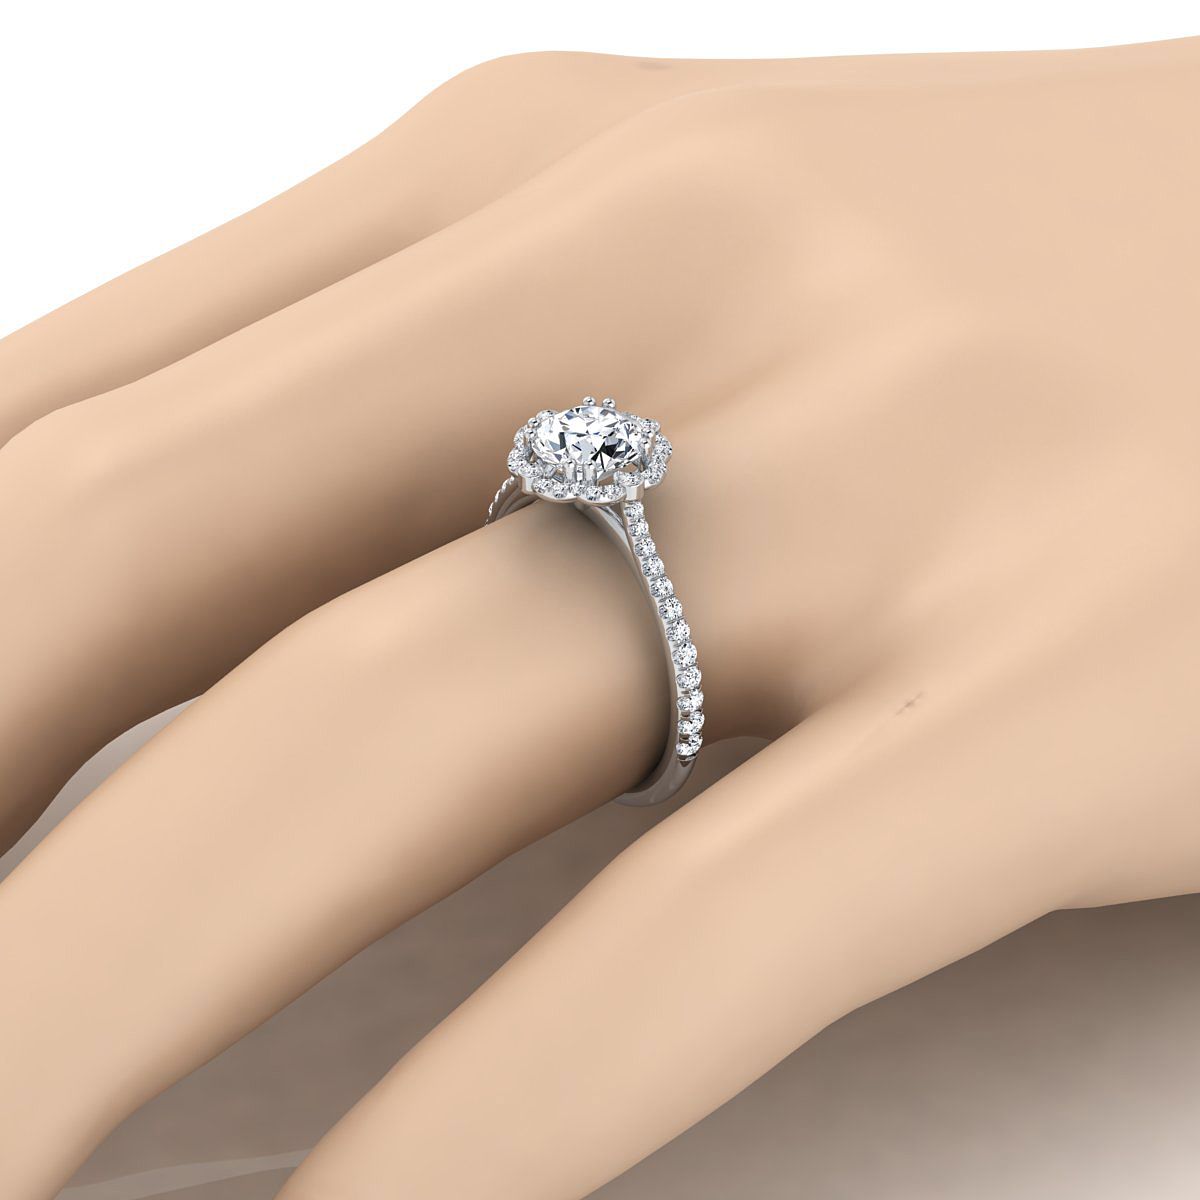 18K White Gold Round Brilliant Aquamarine Ornate Diamond Halo Vintage Inspired Engagement Ring -1/4ctw